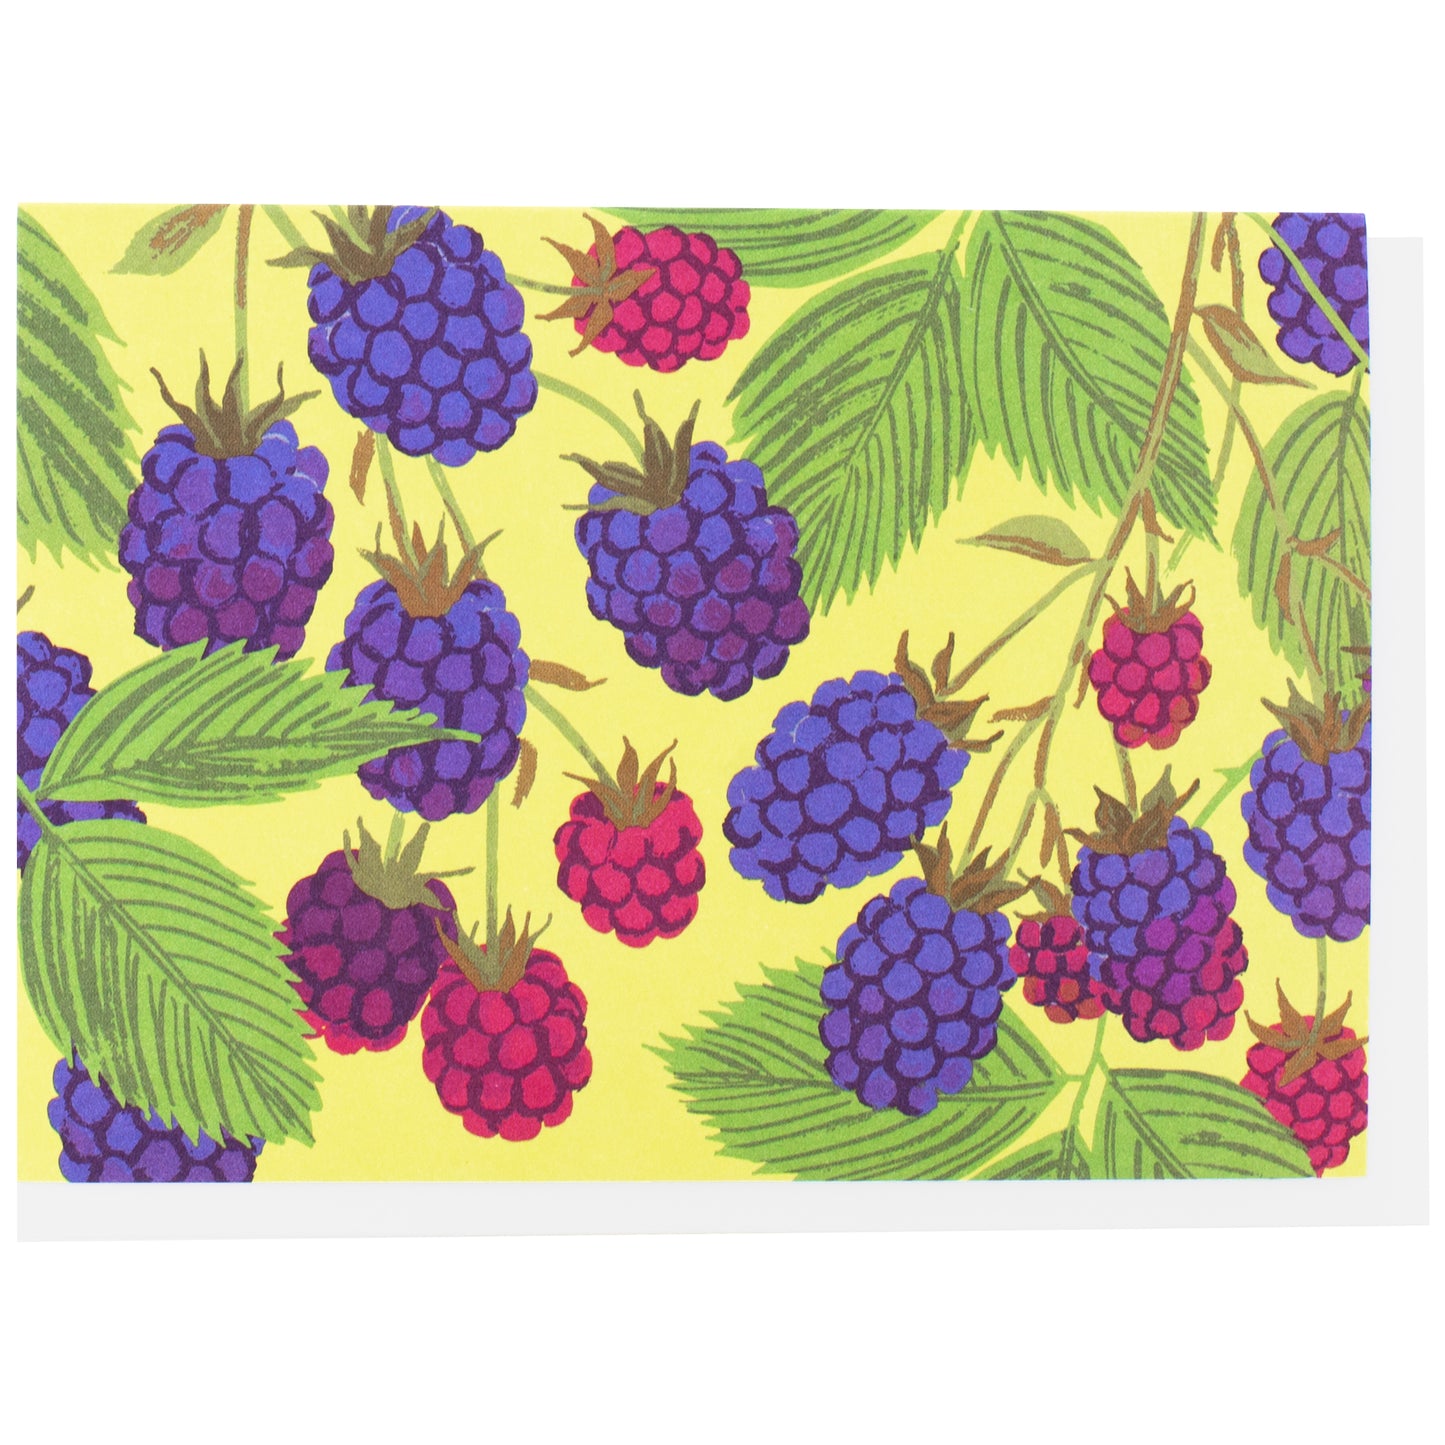 Assorted Fruits & Veggies Note Card Set